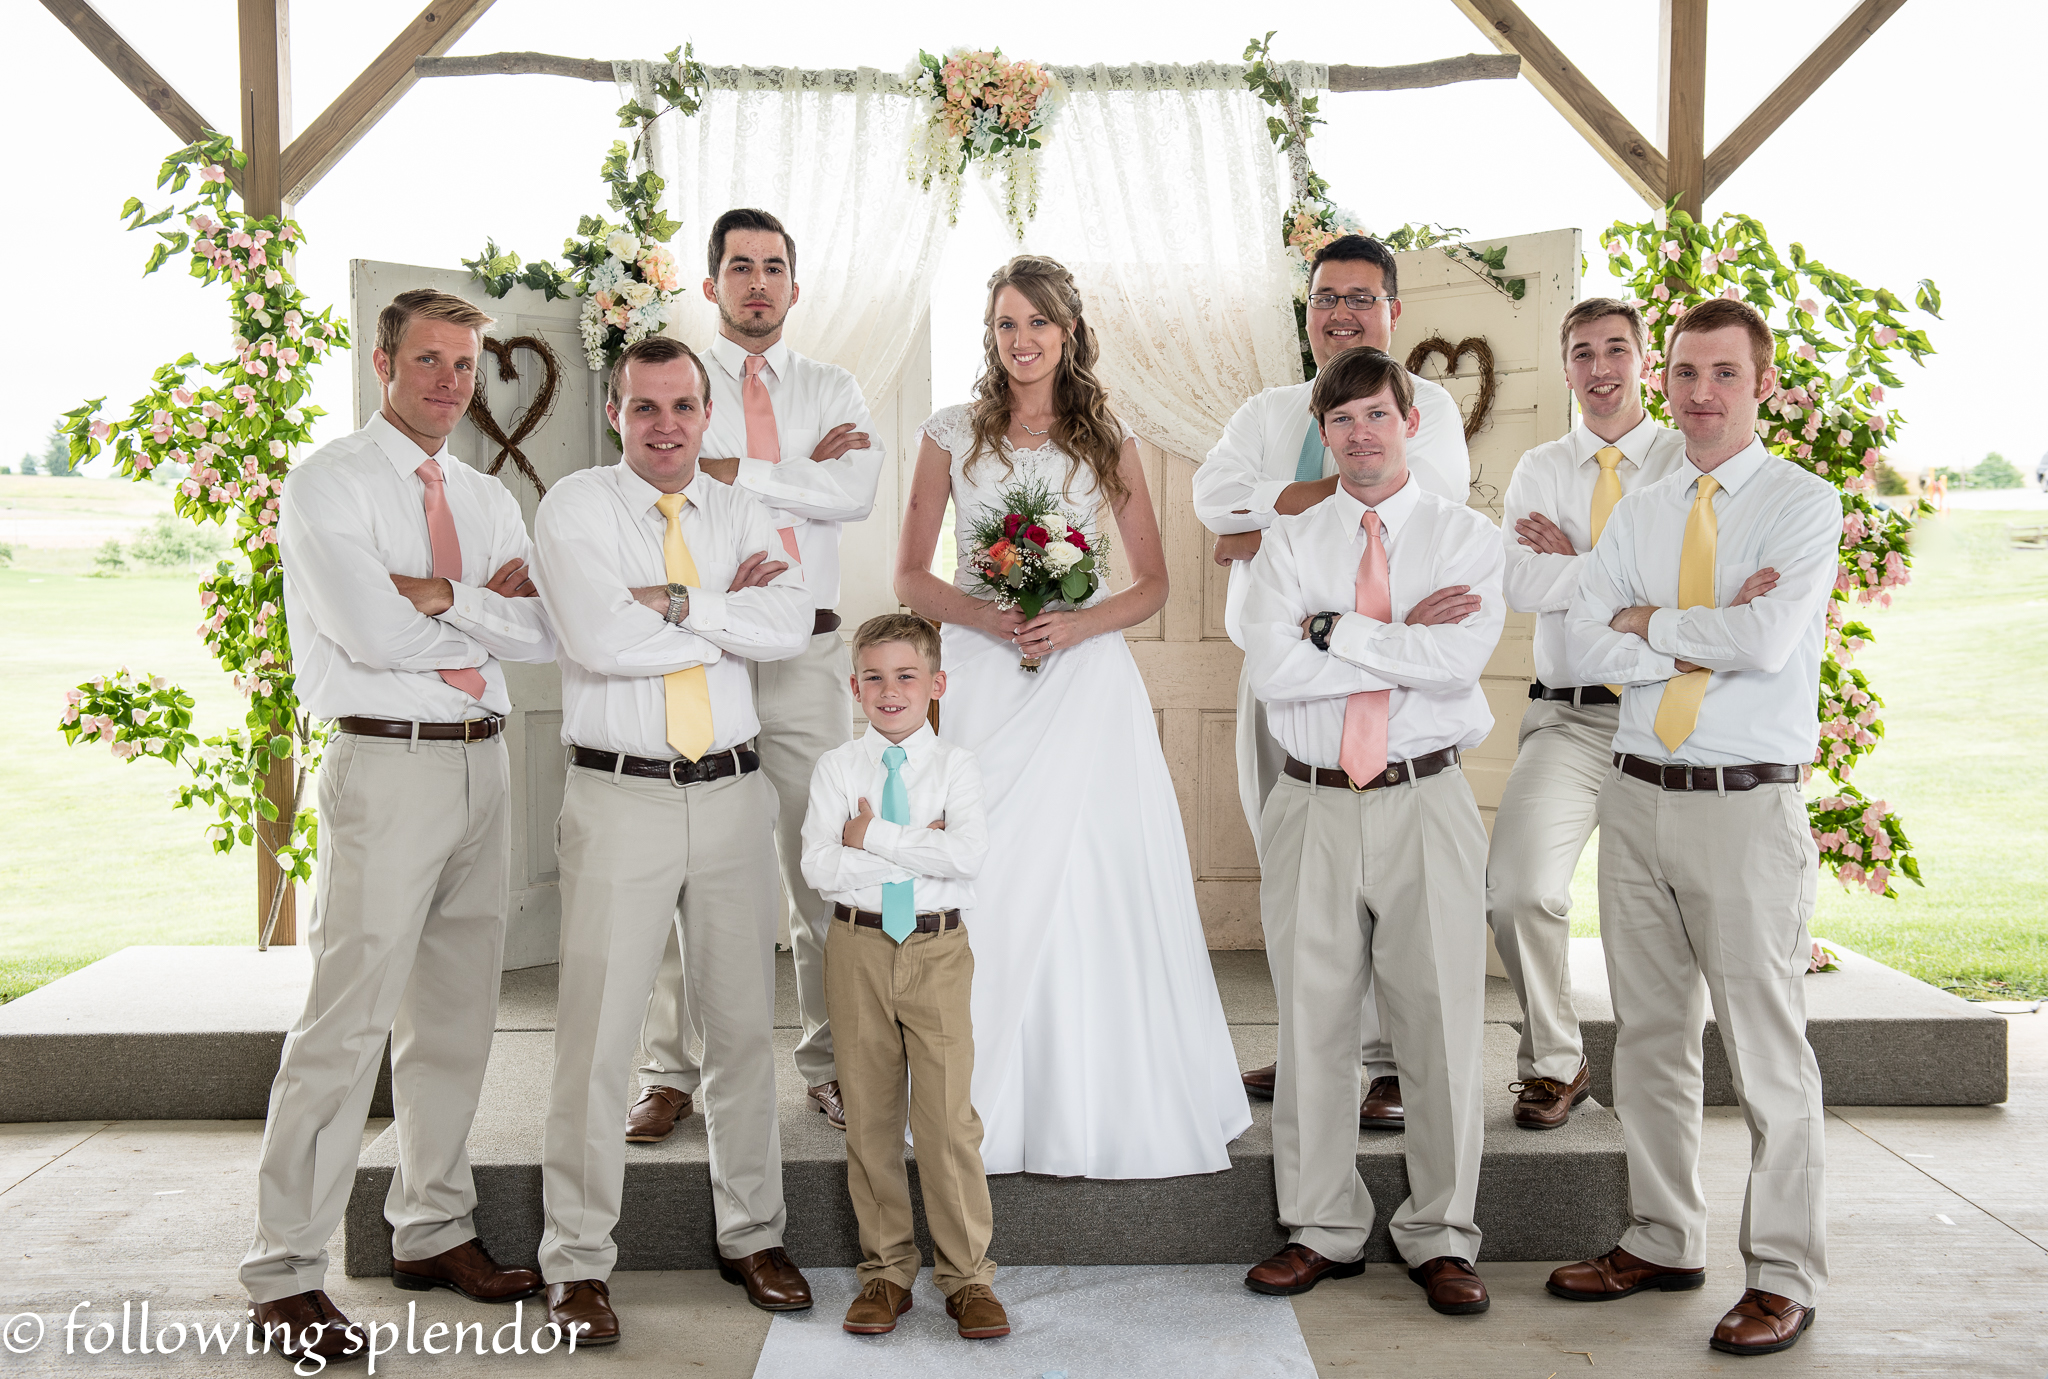 Erin & Michael  |  Little Rock, Arkansas Wedding Photographer